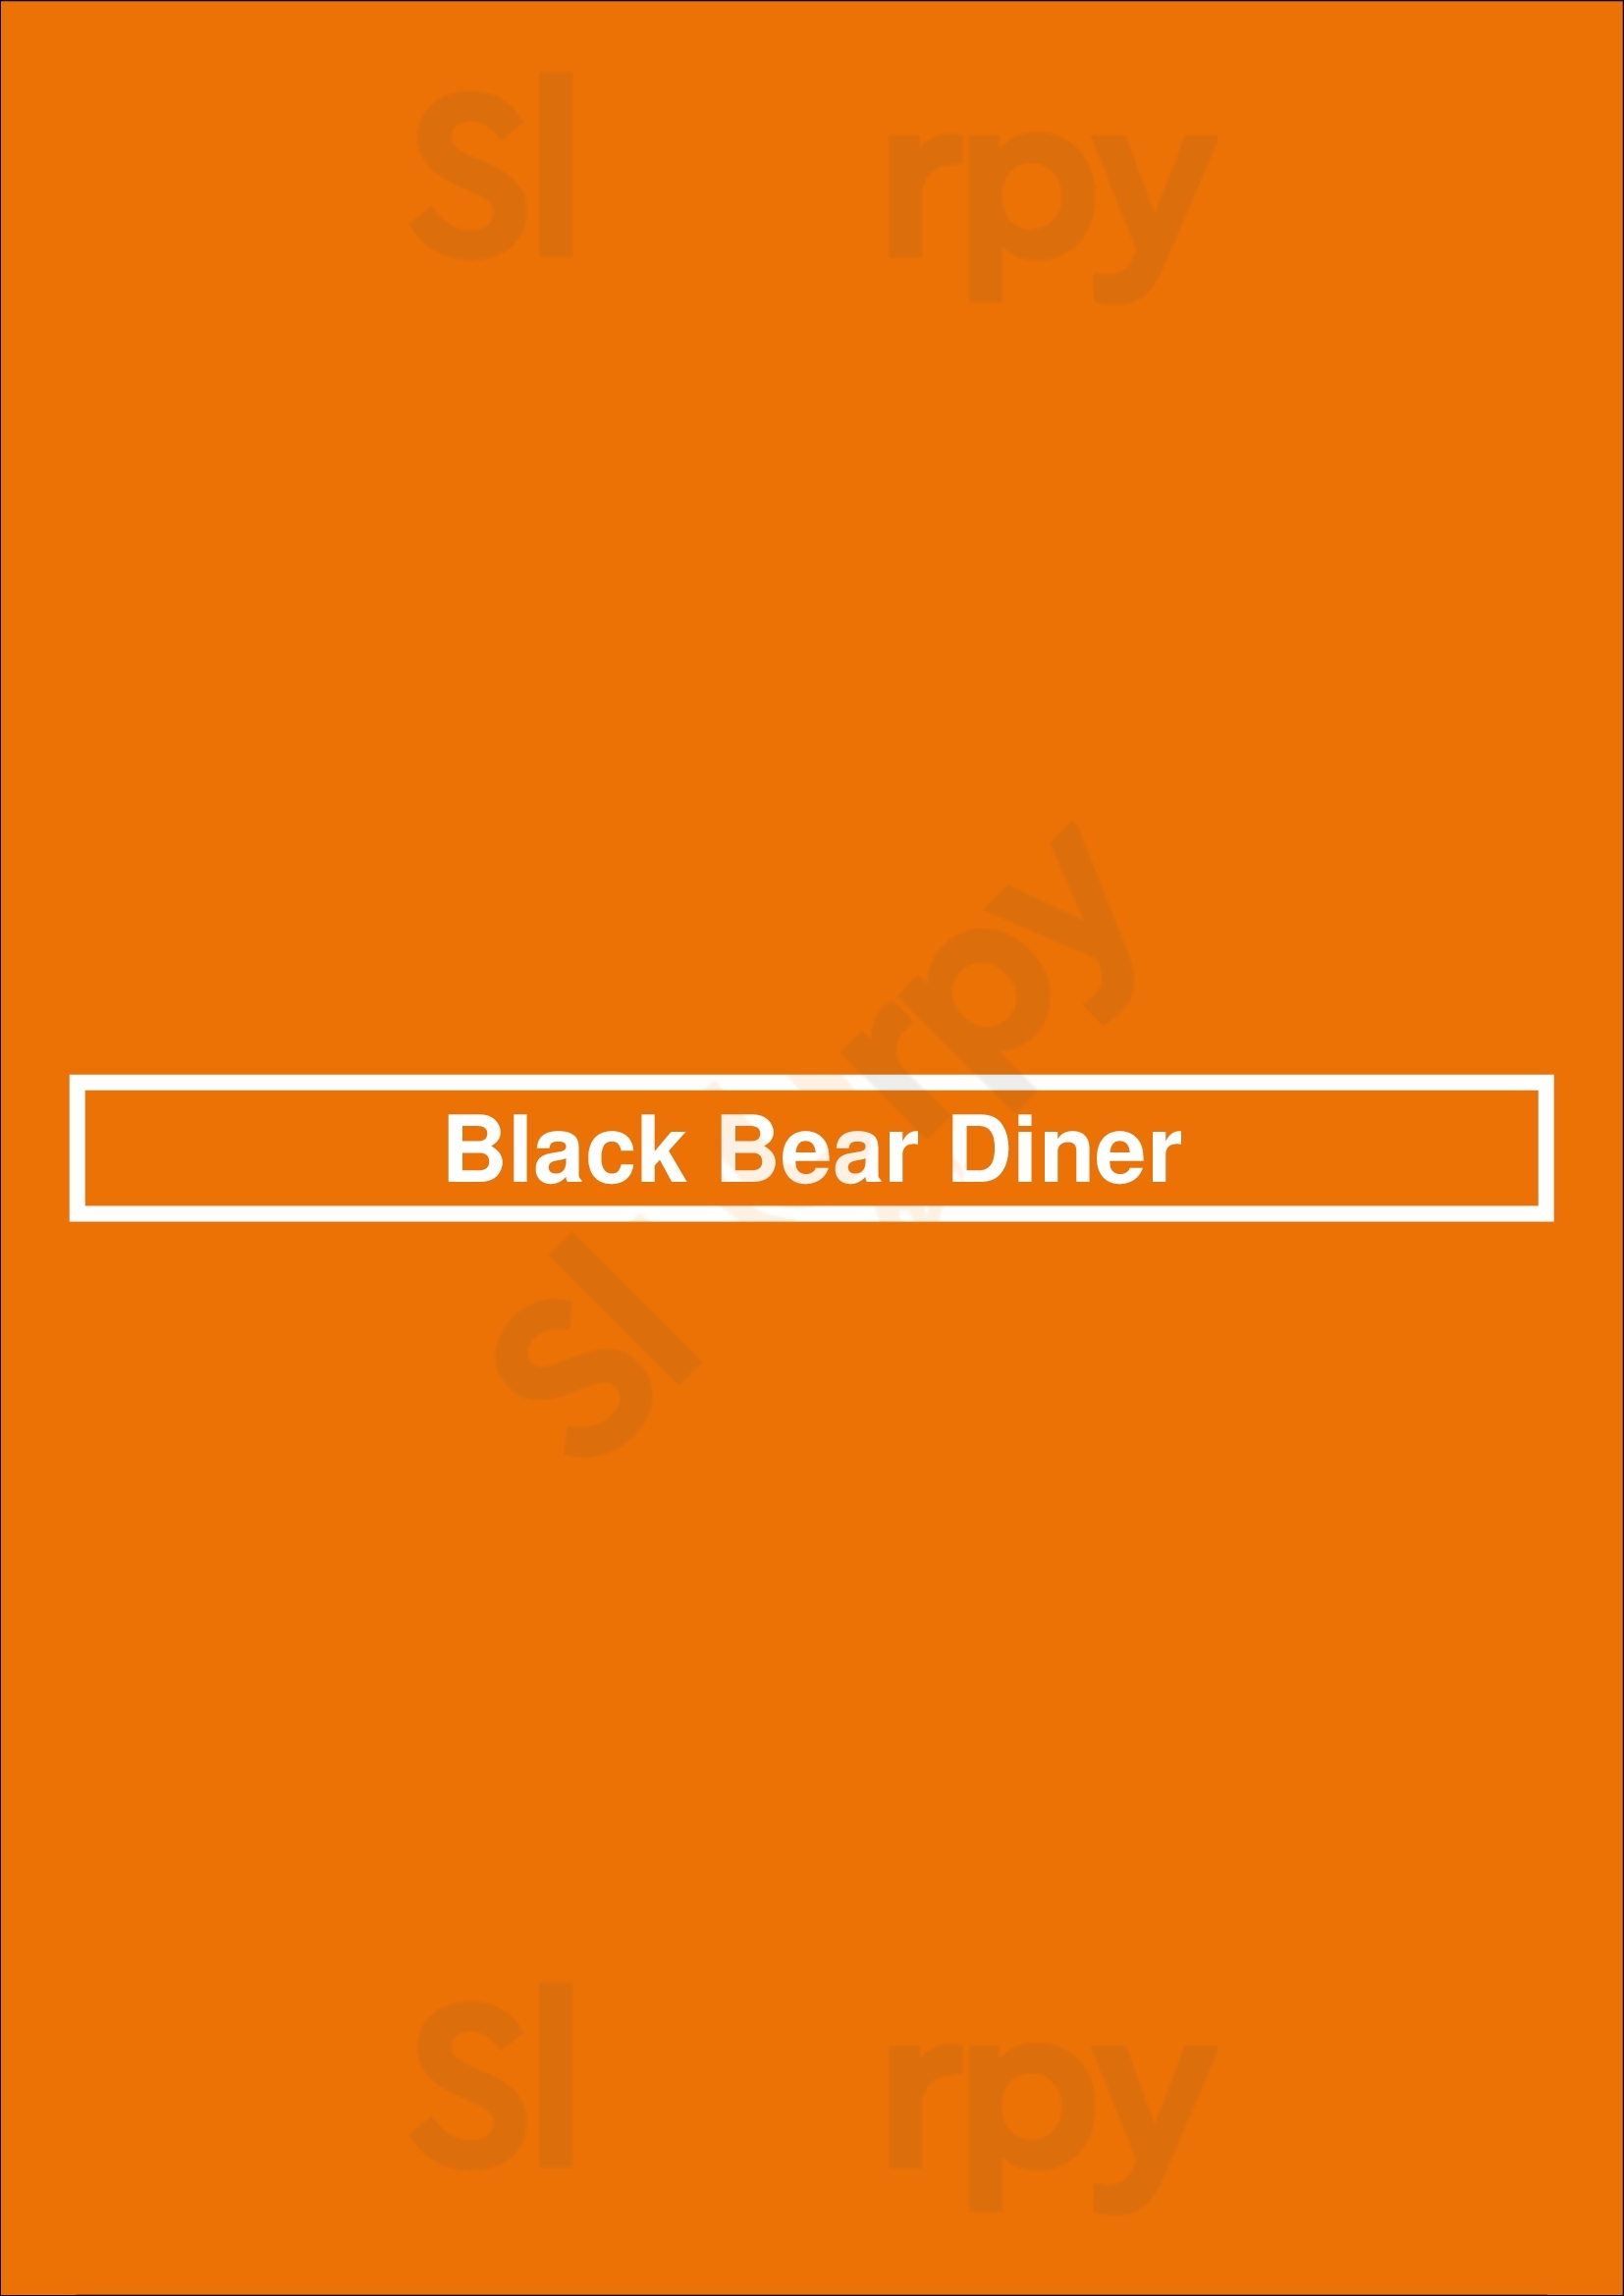 Black Bear Diner Tulsa Menu - 1